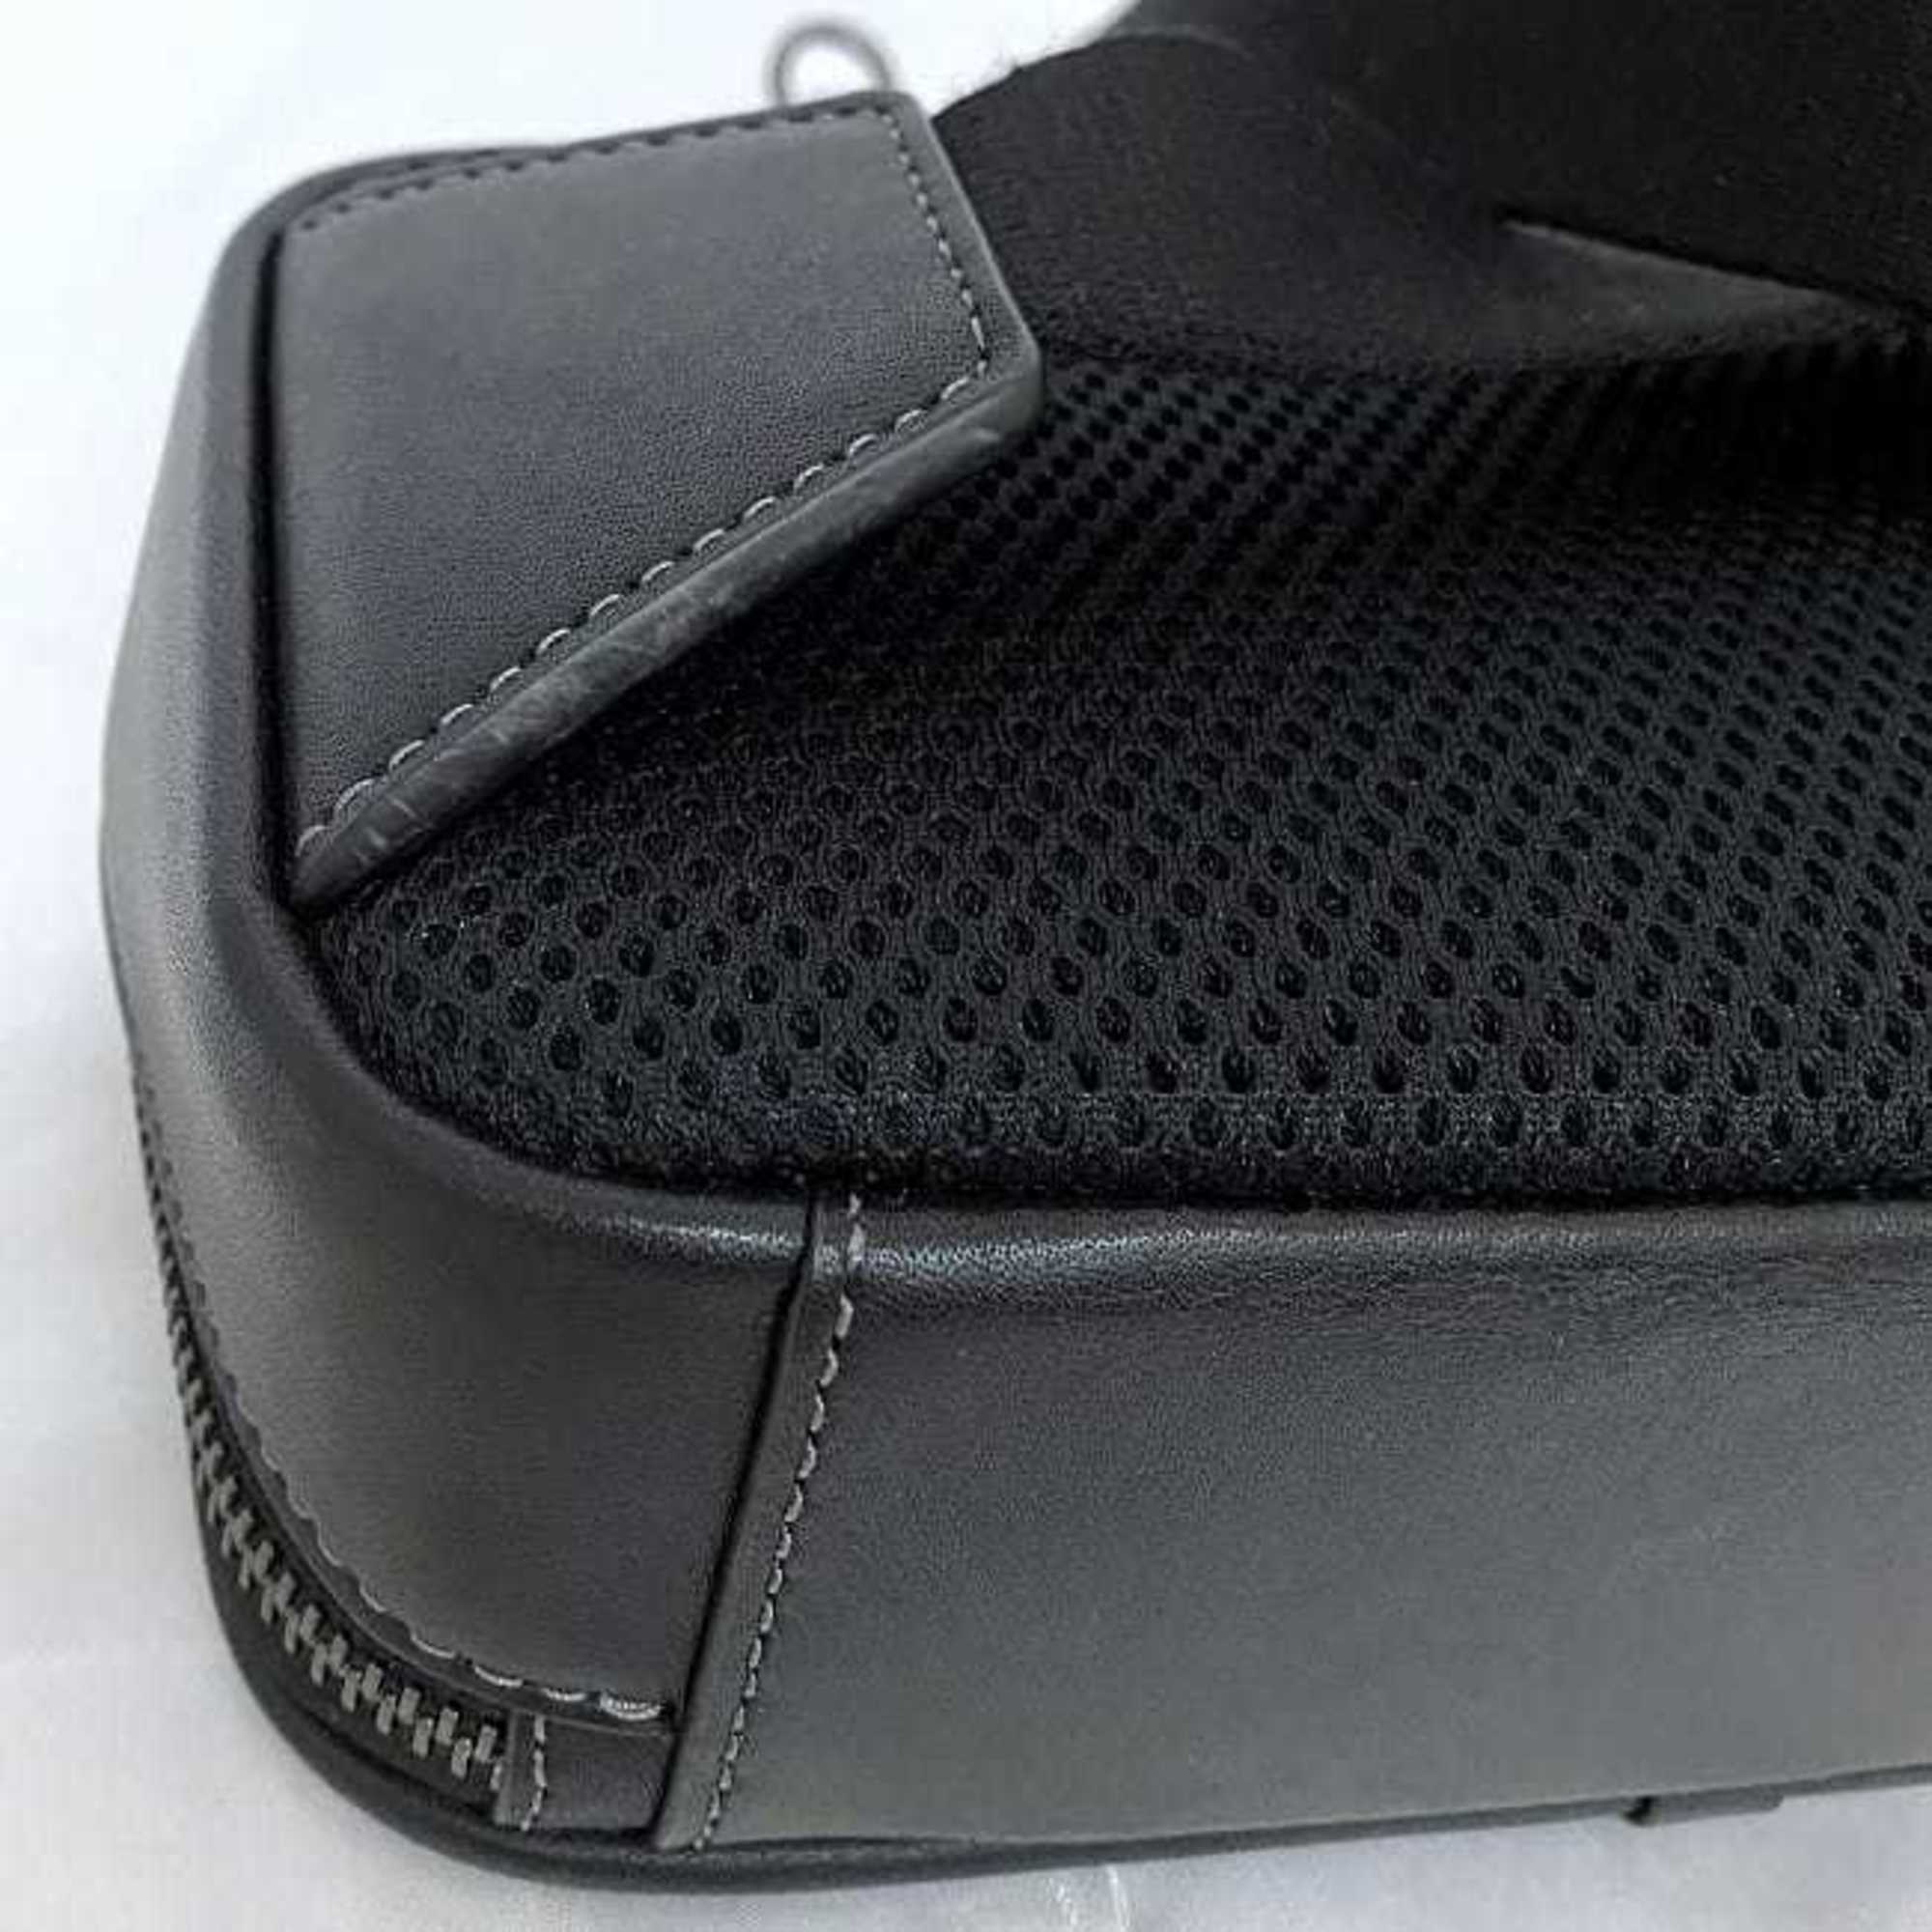 Coach Body Bag Black Red Check CN405 ec-20068 Print Wyatt PVC Leather COACH Waist Pouch Belt Pattern Women's Compact